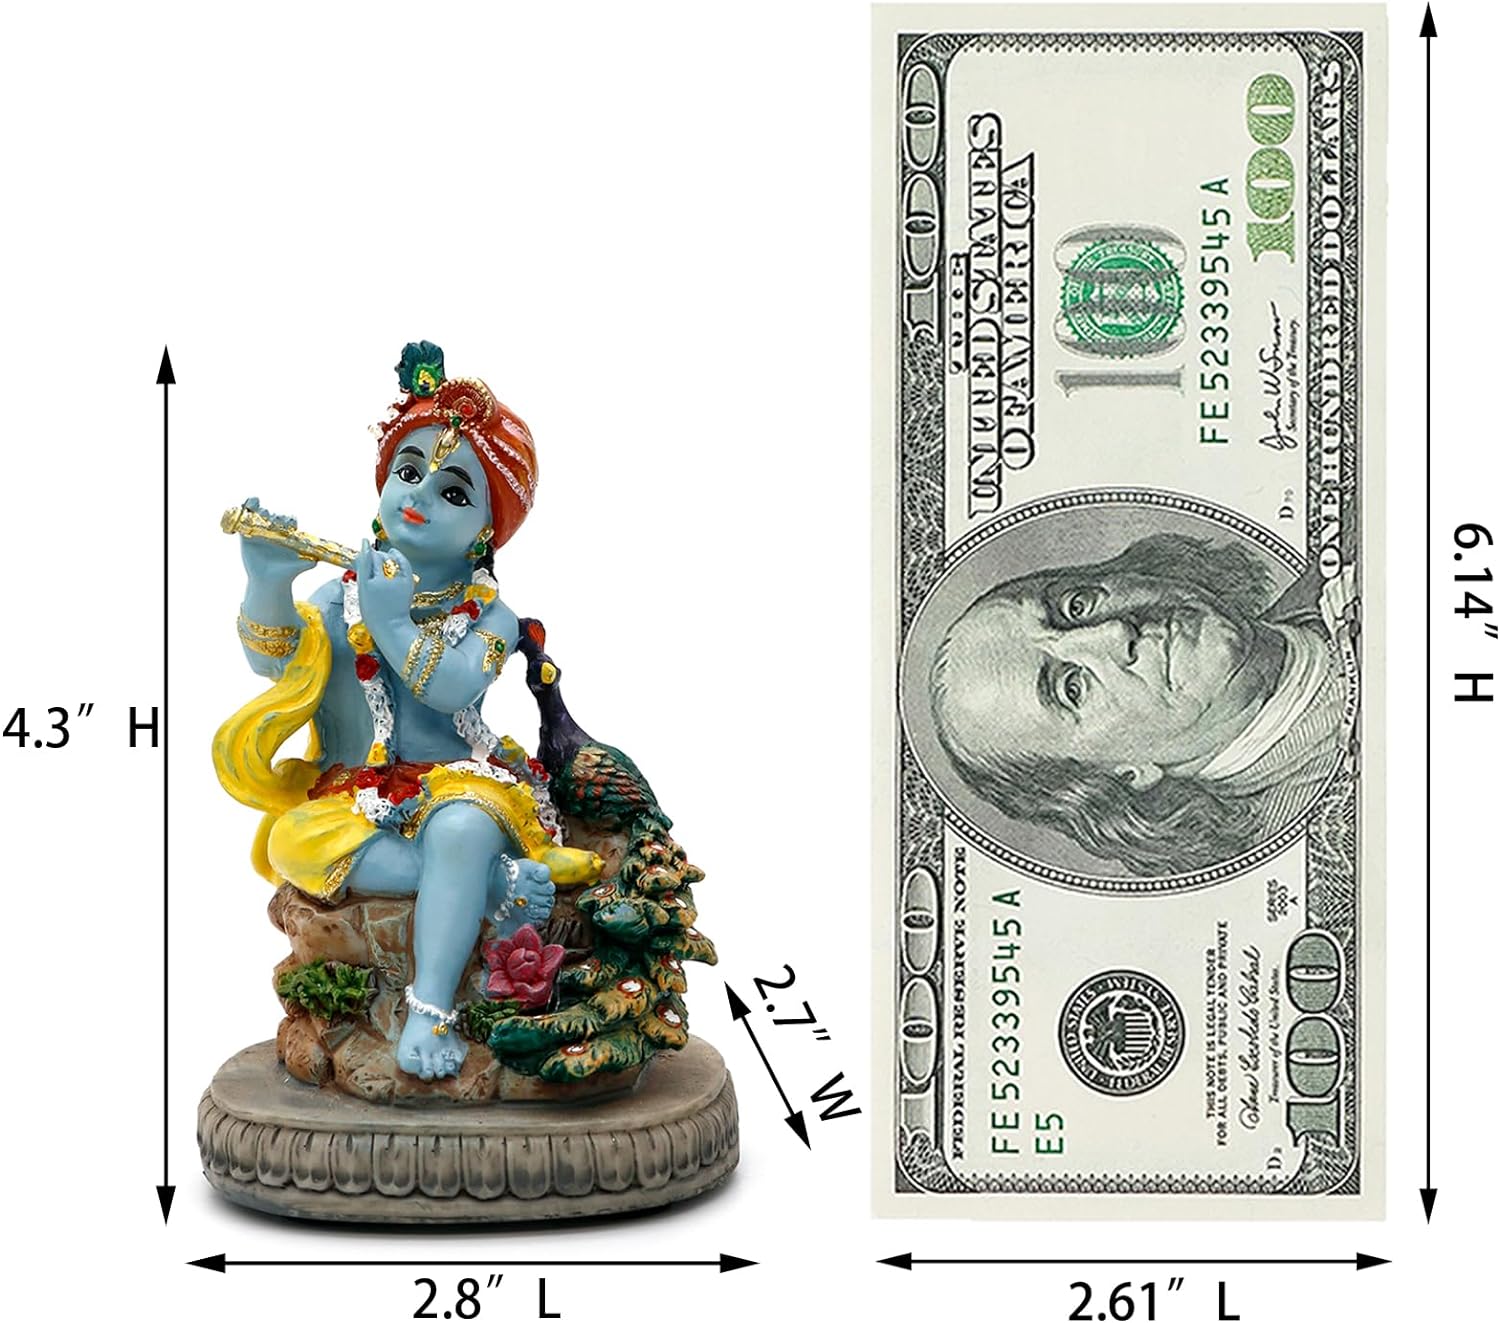 Hindu God Lord Krishna Statue – 4.3 H Indian Idol Krishna Sculpture India Wedding Baby Shower Return Gifts Diwali Gifts Home Office Mandir Temple Puja Gifts Murti Pooja Item